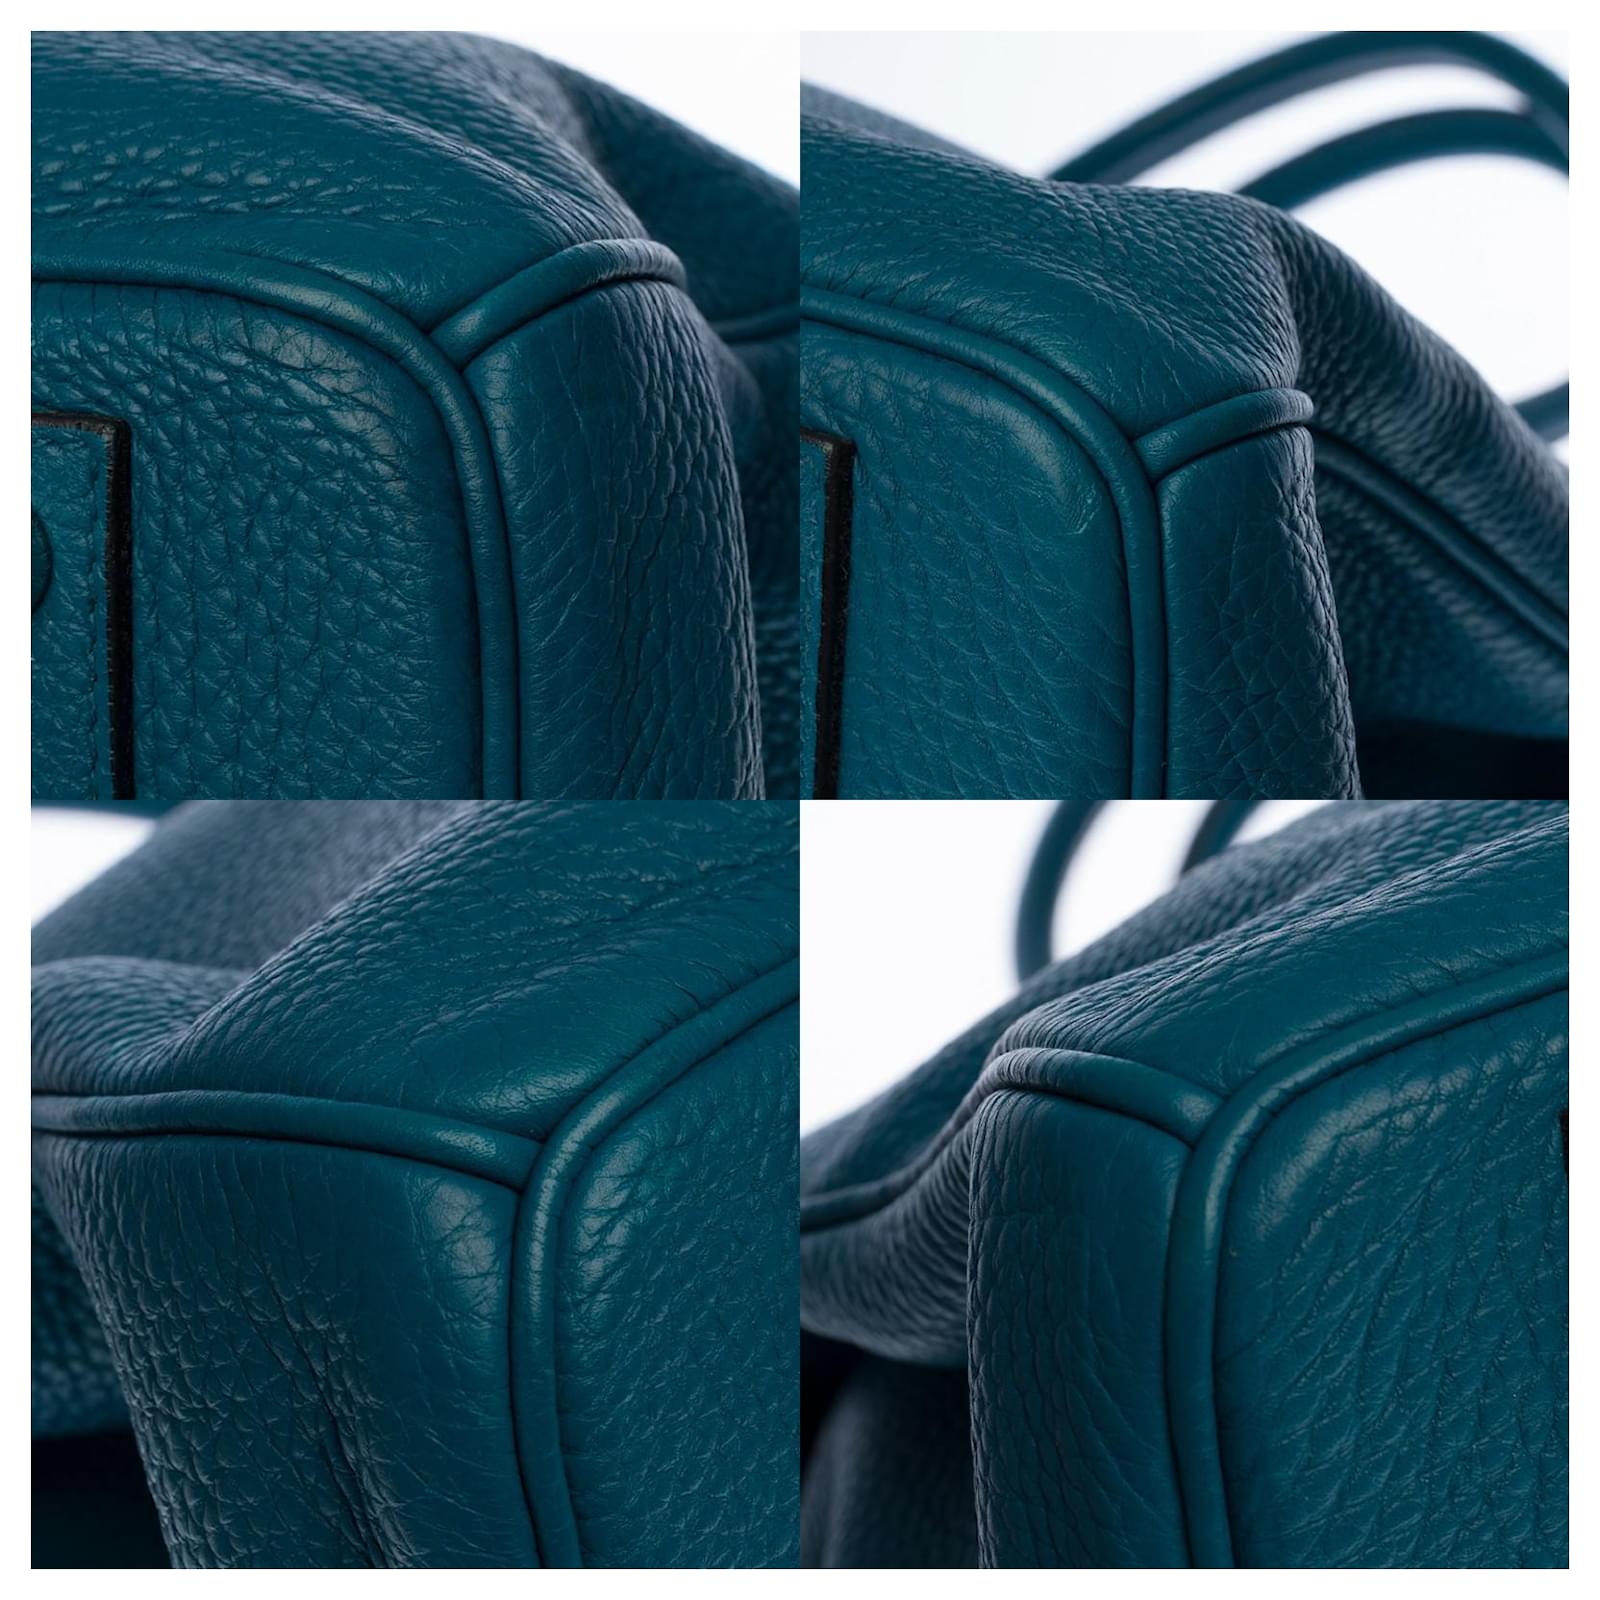 Birkin 40 leather handbag Hermès Black in Leather - 31605008